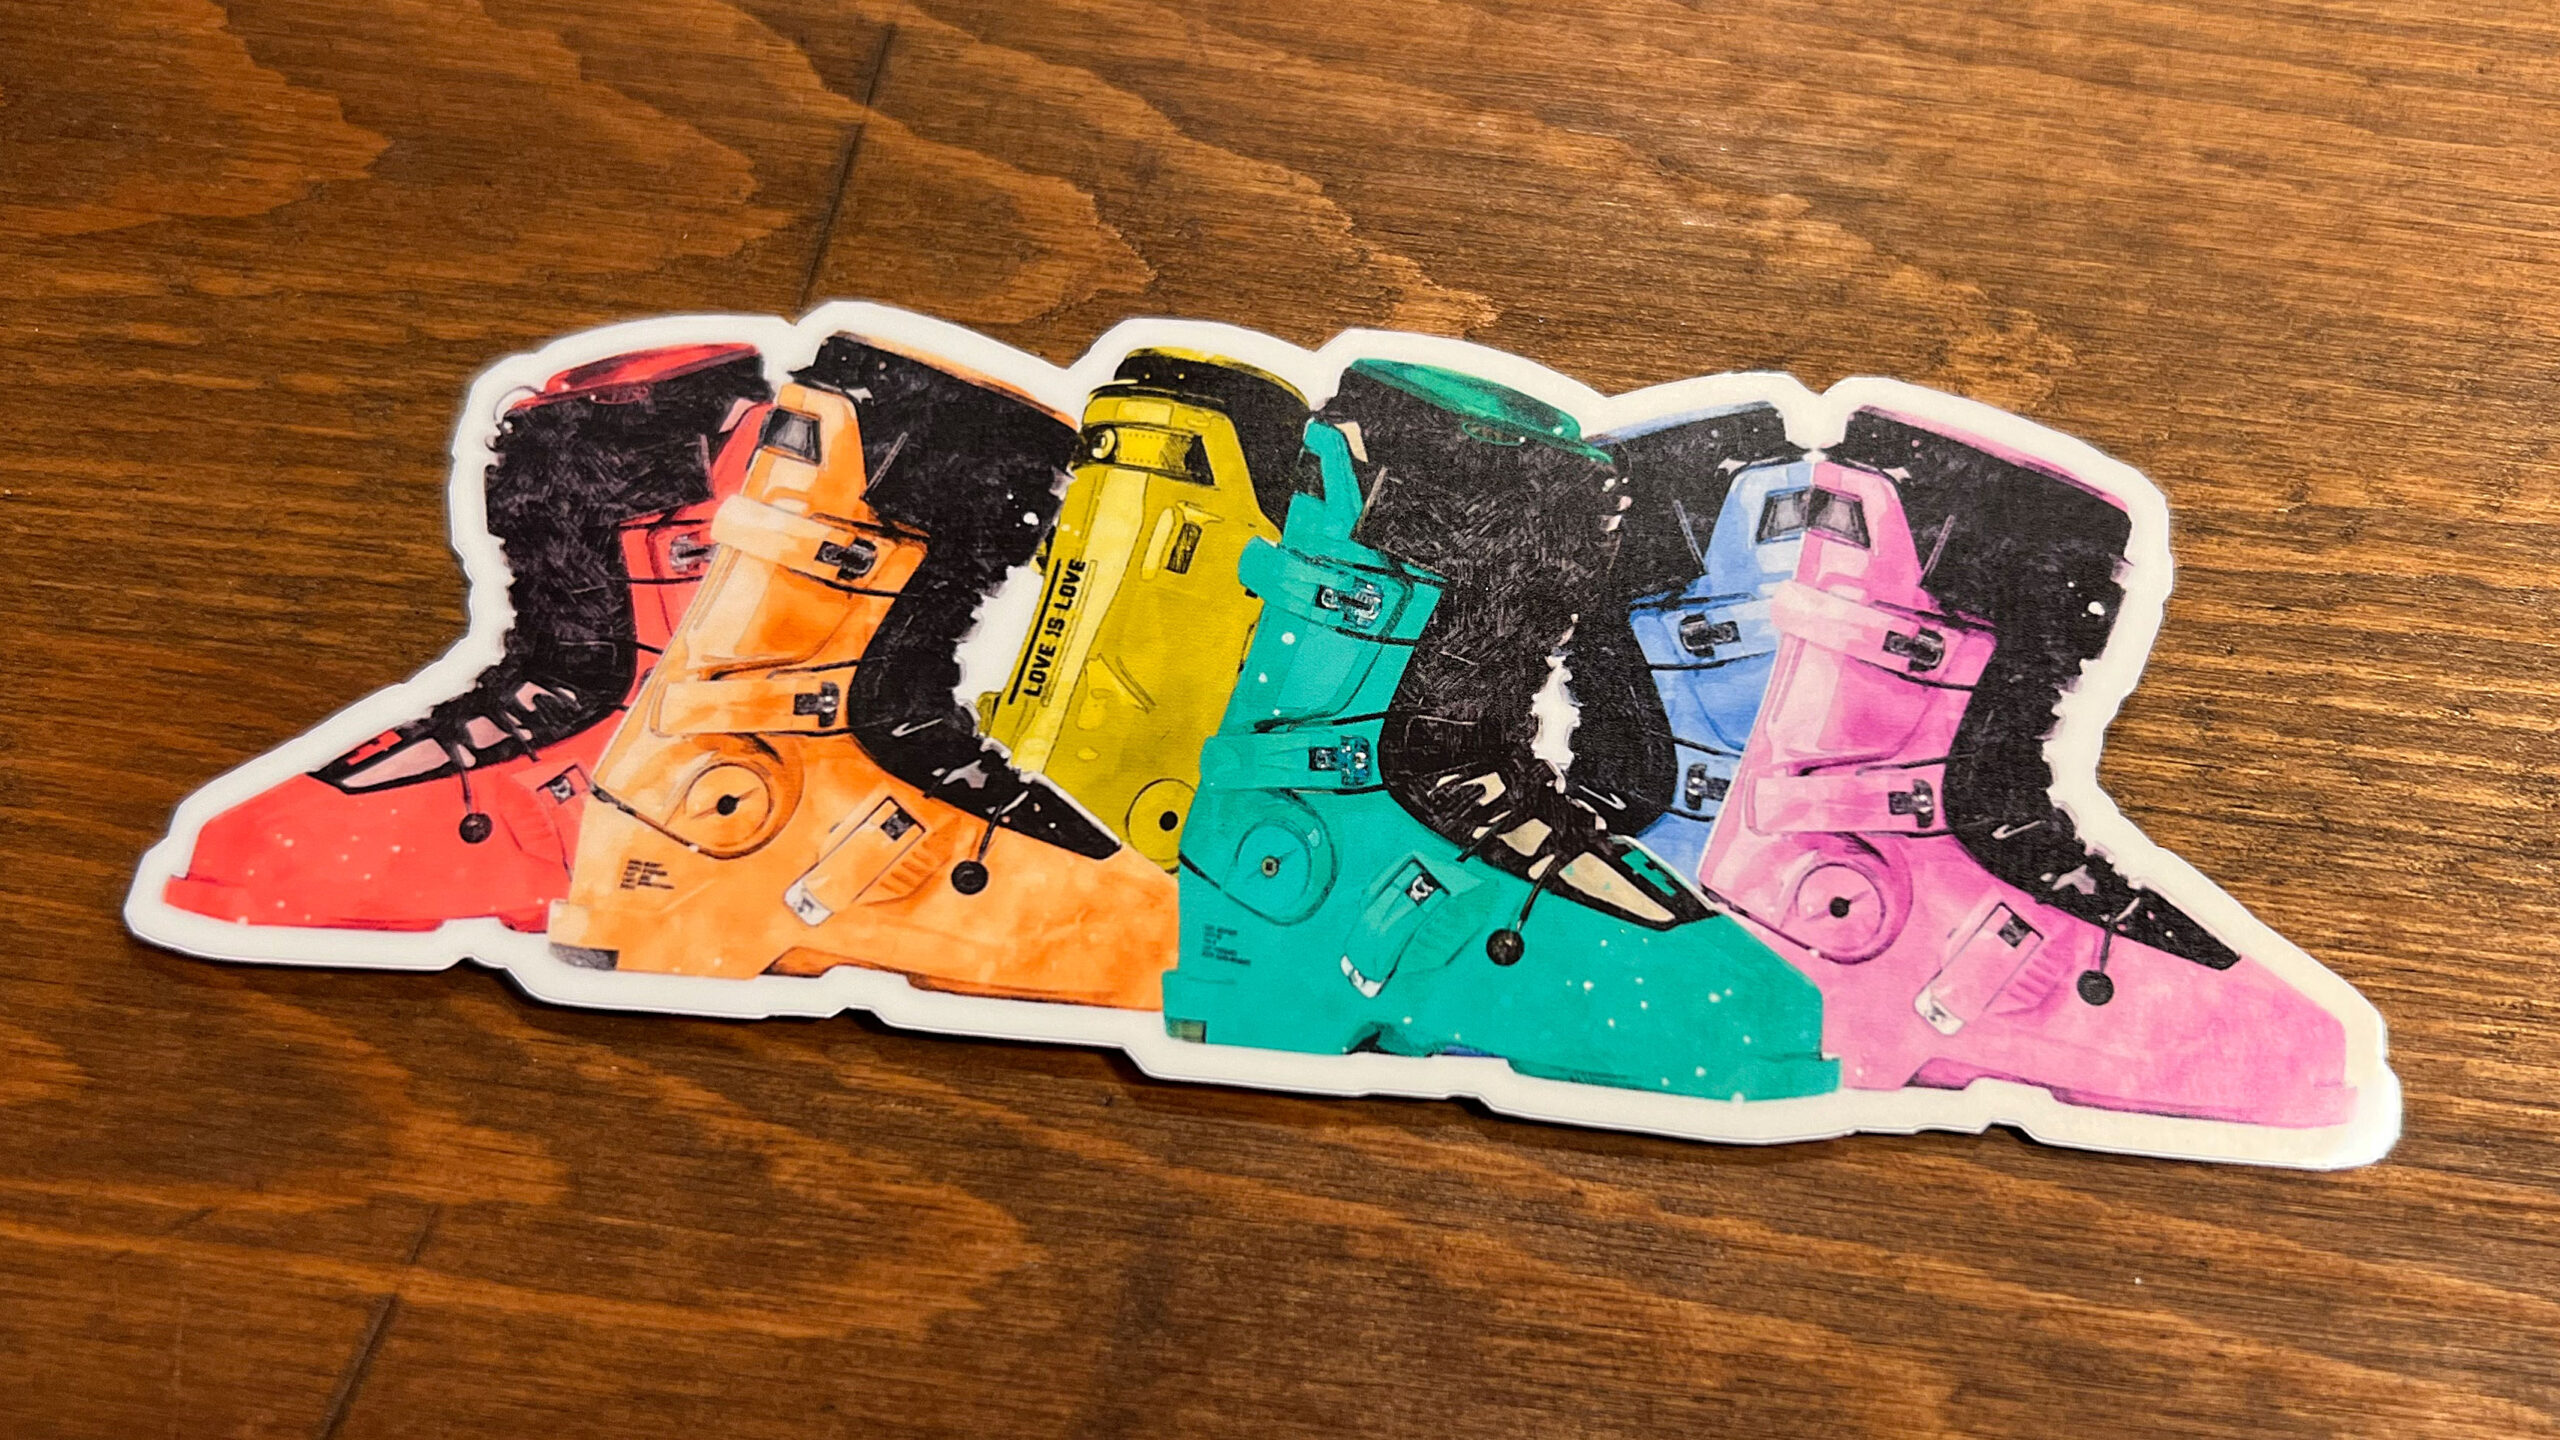 Vinyl Sticker featuring ski boots in pride rainbow colors